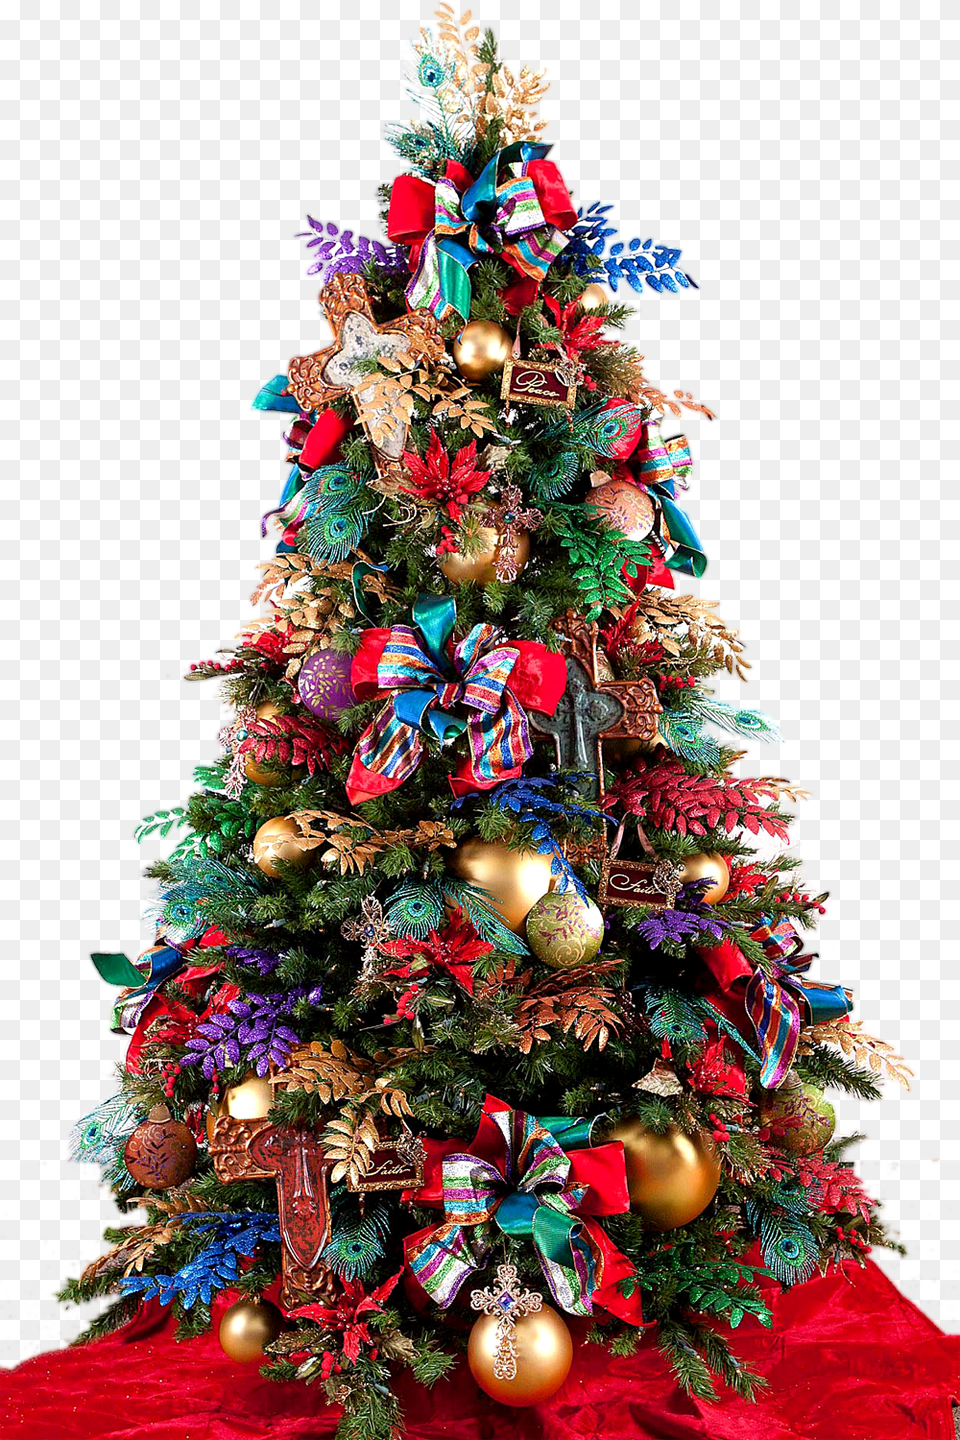 Christmas Tree Ribbon Design Iamge Jewel Tone Christmas Decorations Ideas, Christmas Decorations, Festival, Christmas Tree, Plant Png